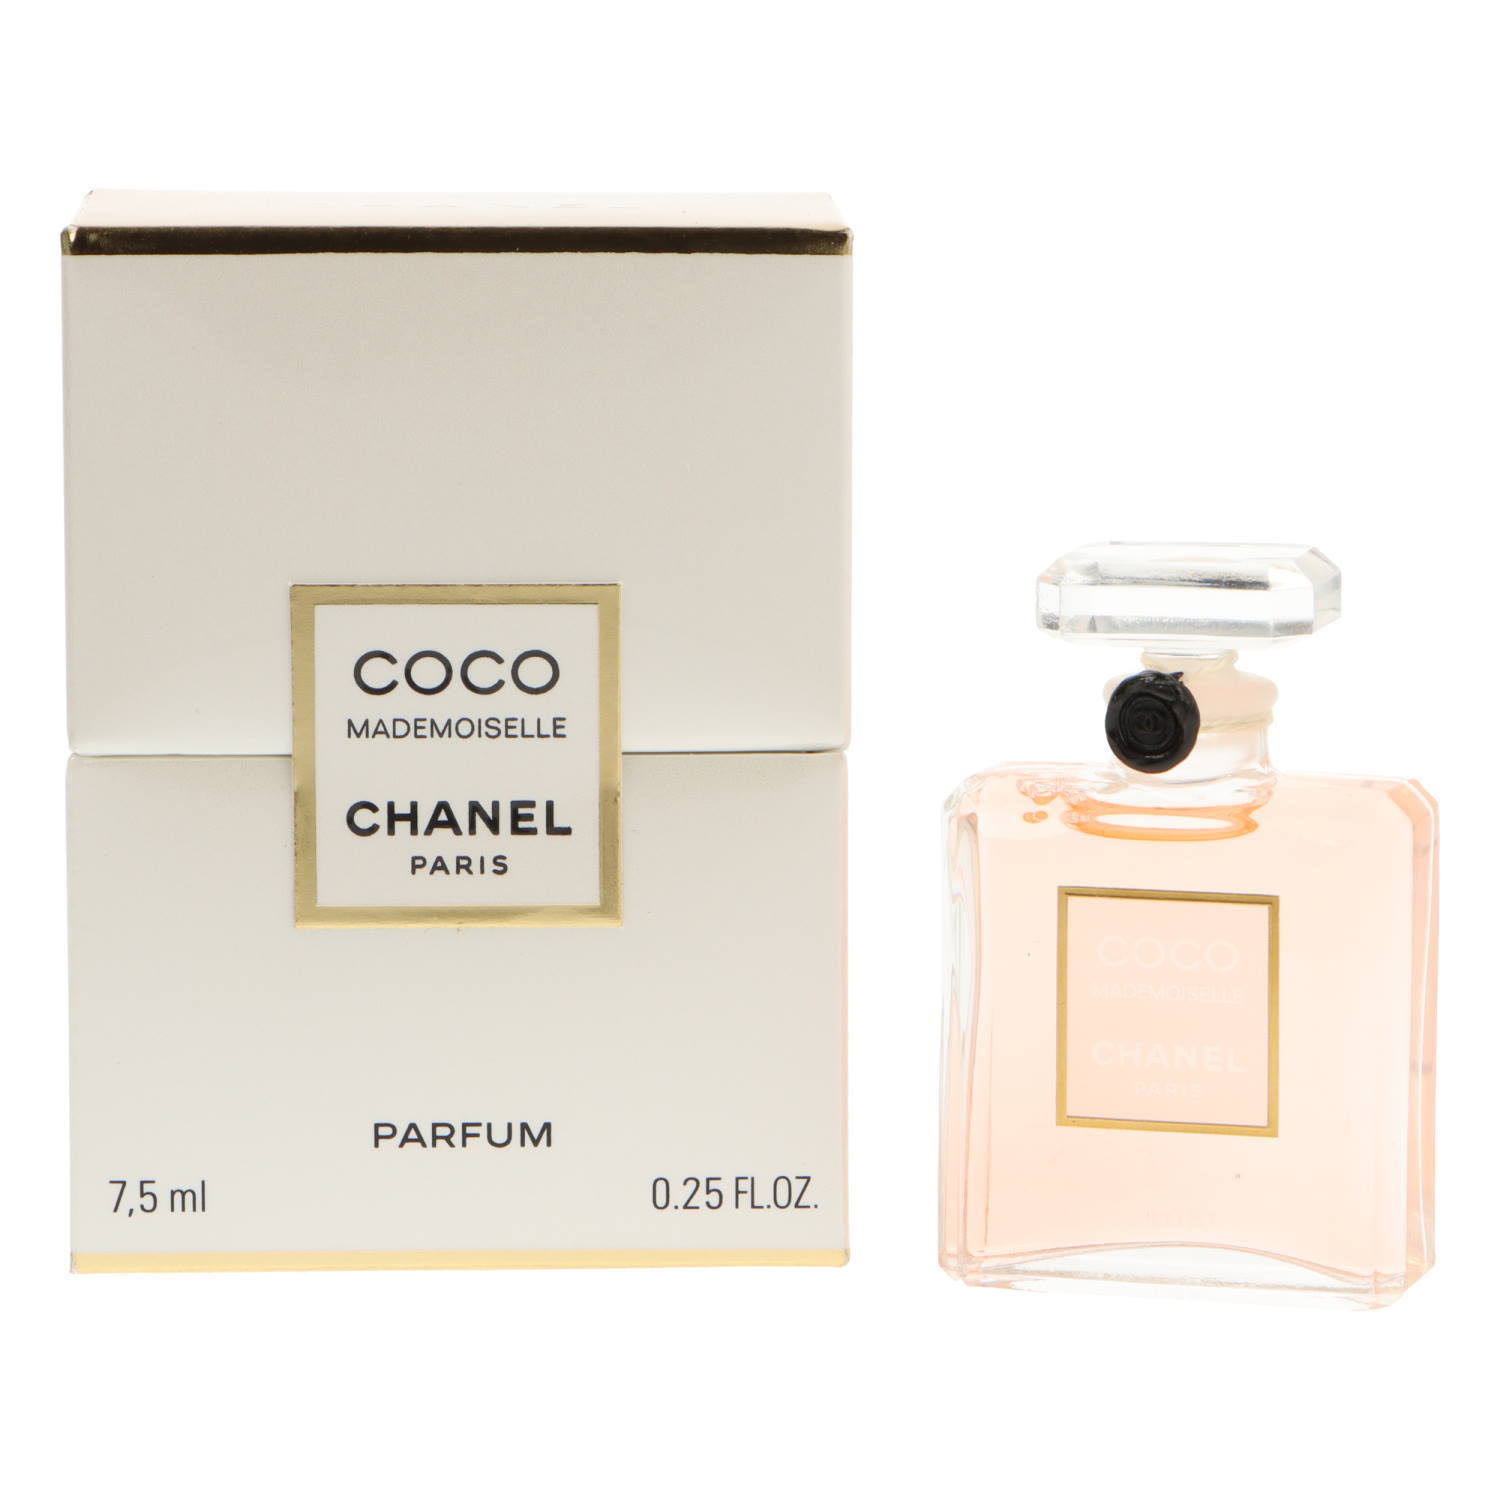 Chanel Coco Mademoiselle Parfum - 7.5ml/0.25oz